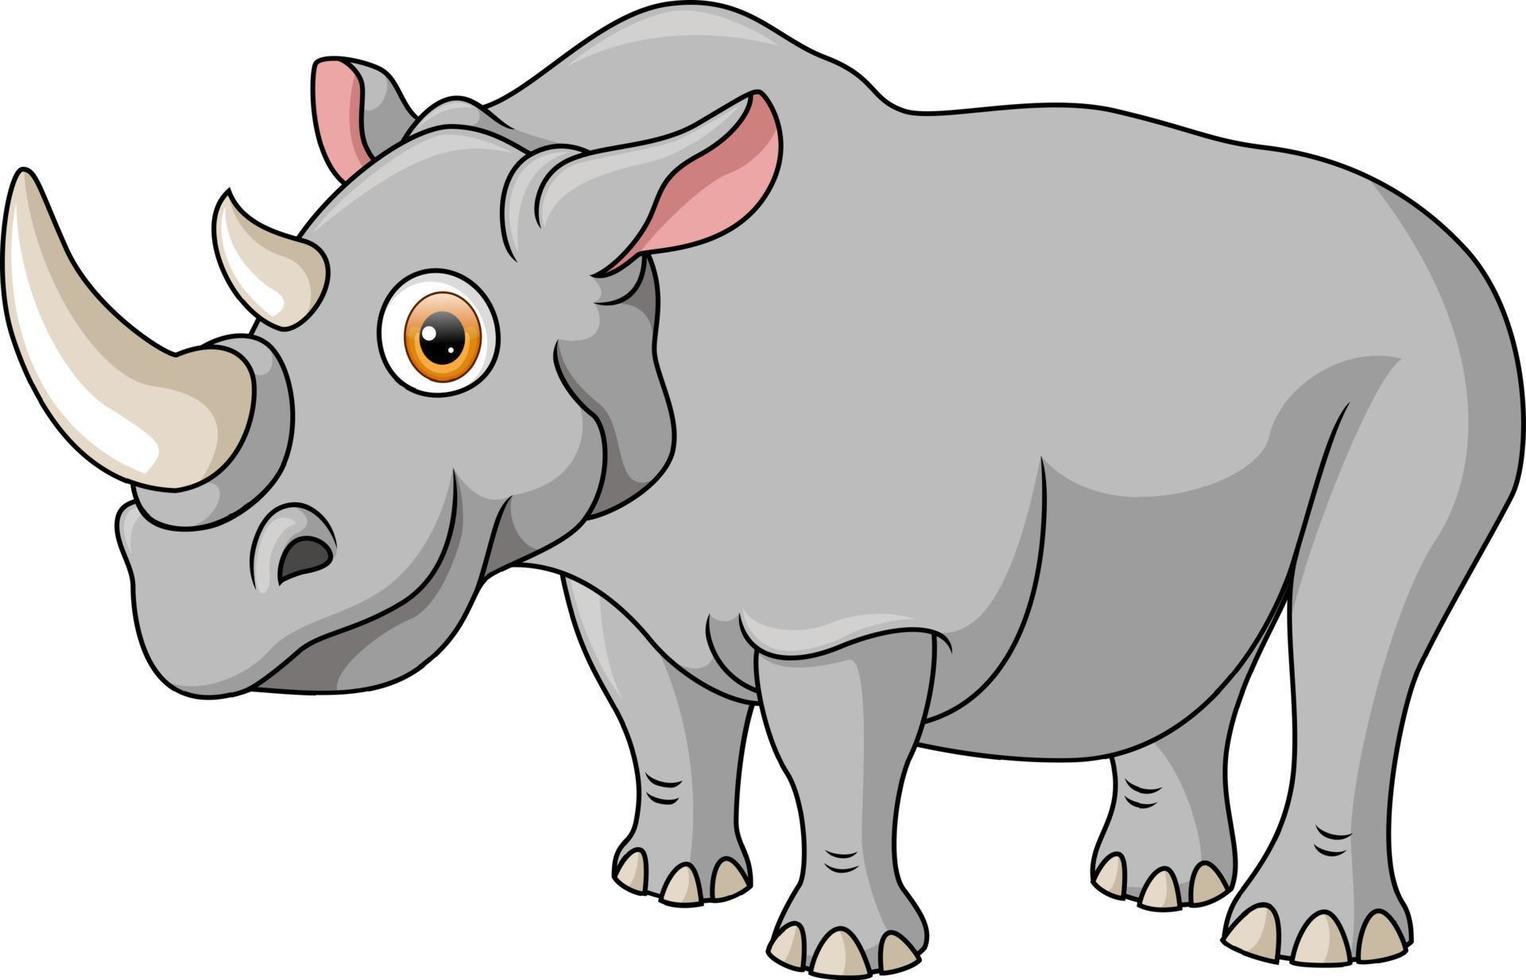 Cute rhino cartoon on white background vector